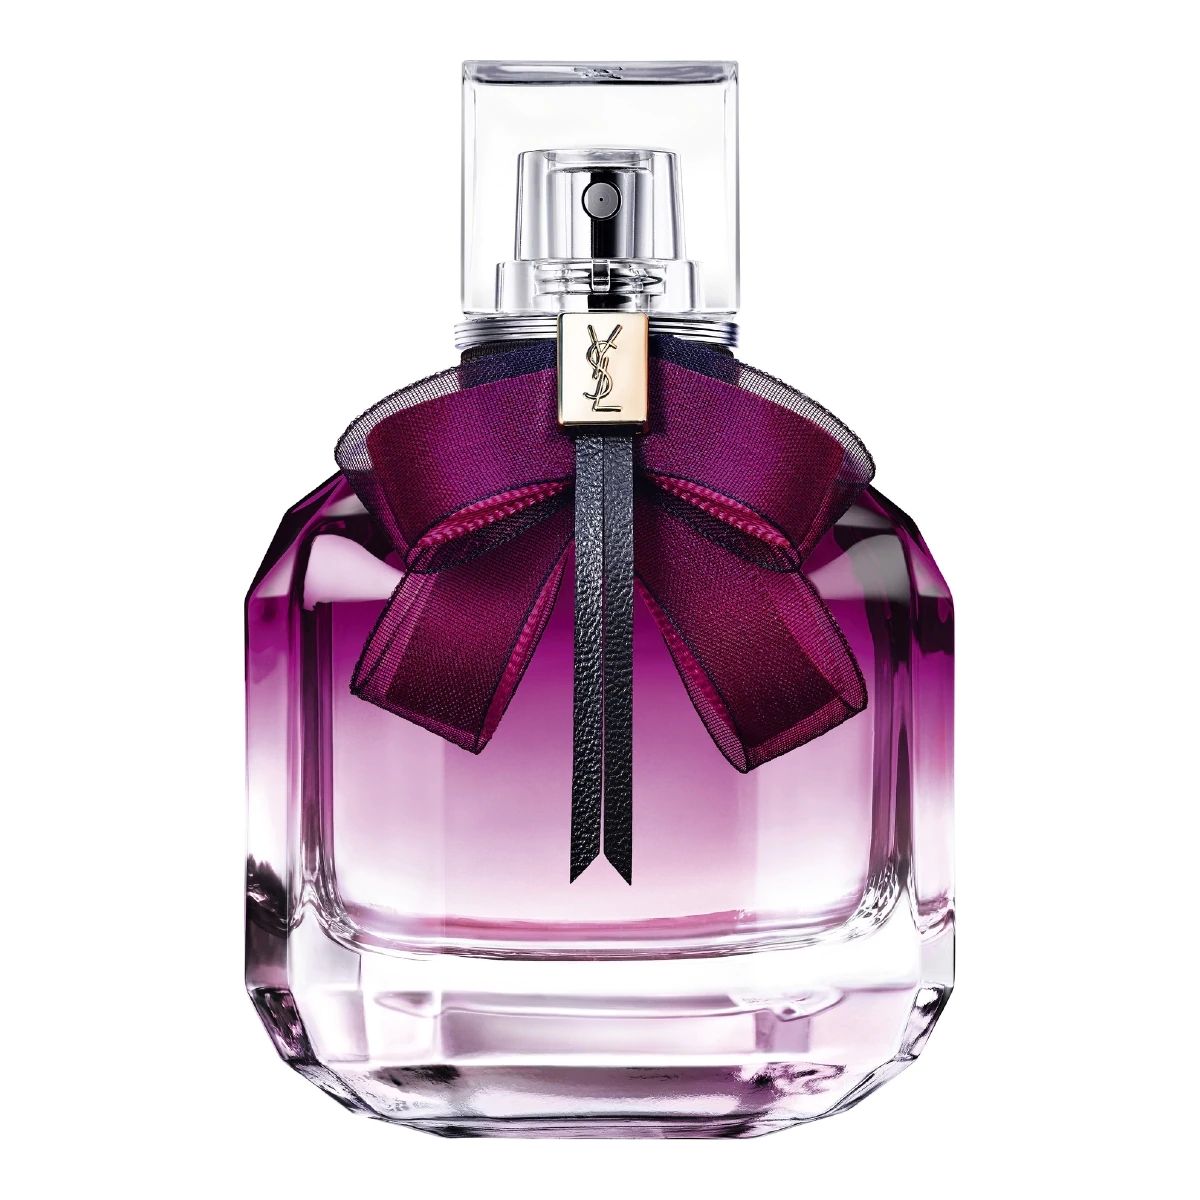 Mon Paris Intensement Yves Saint Laurent perfume a new fragrance for women 2020